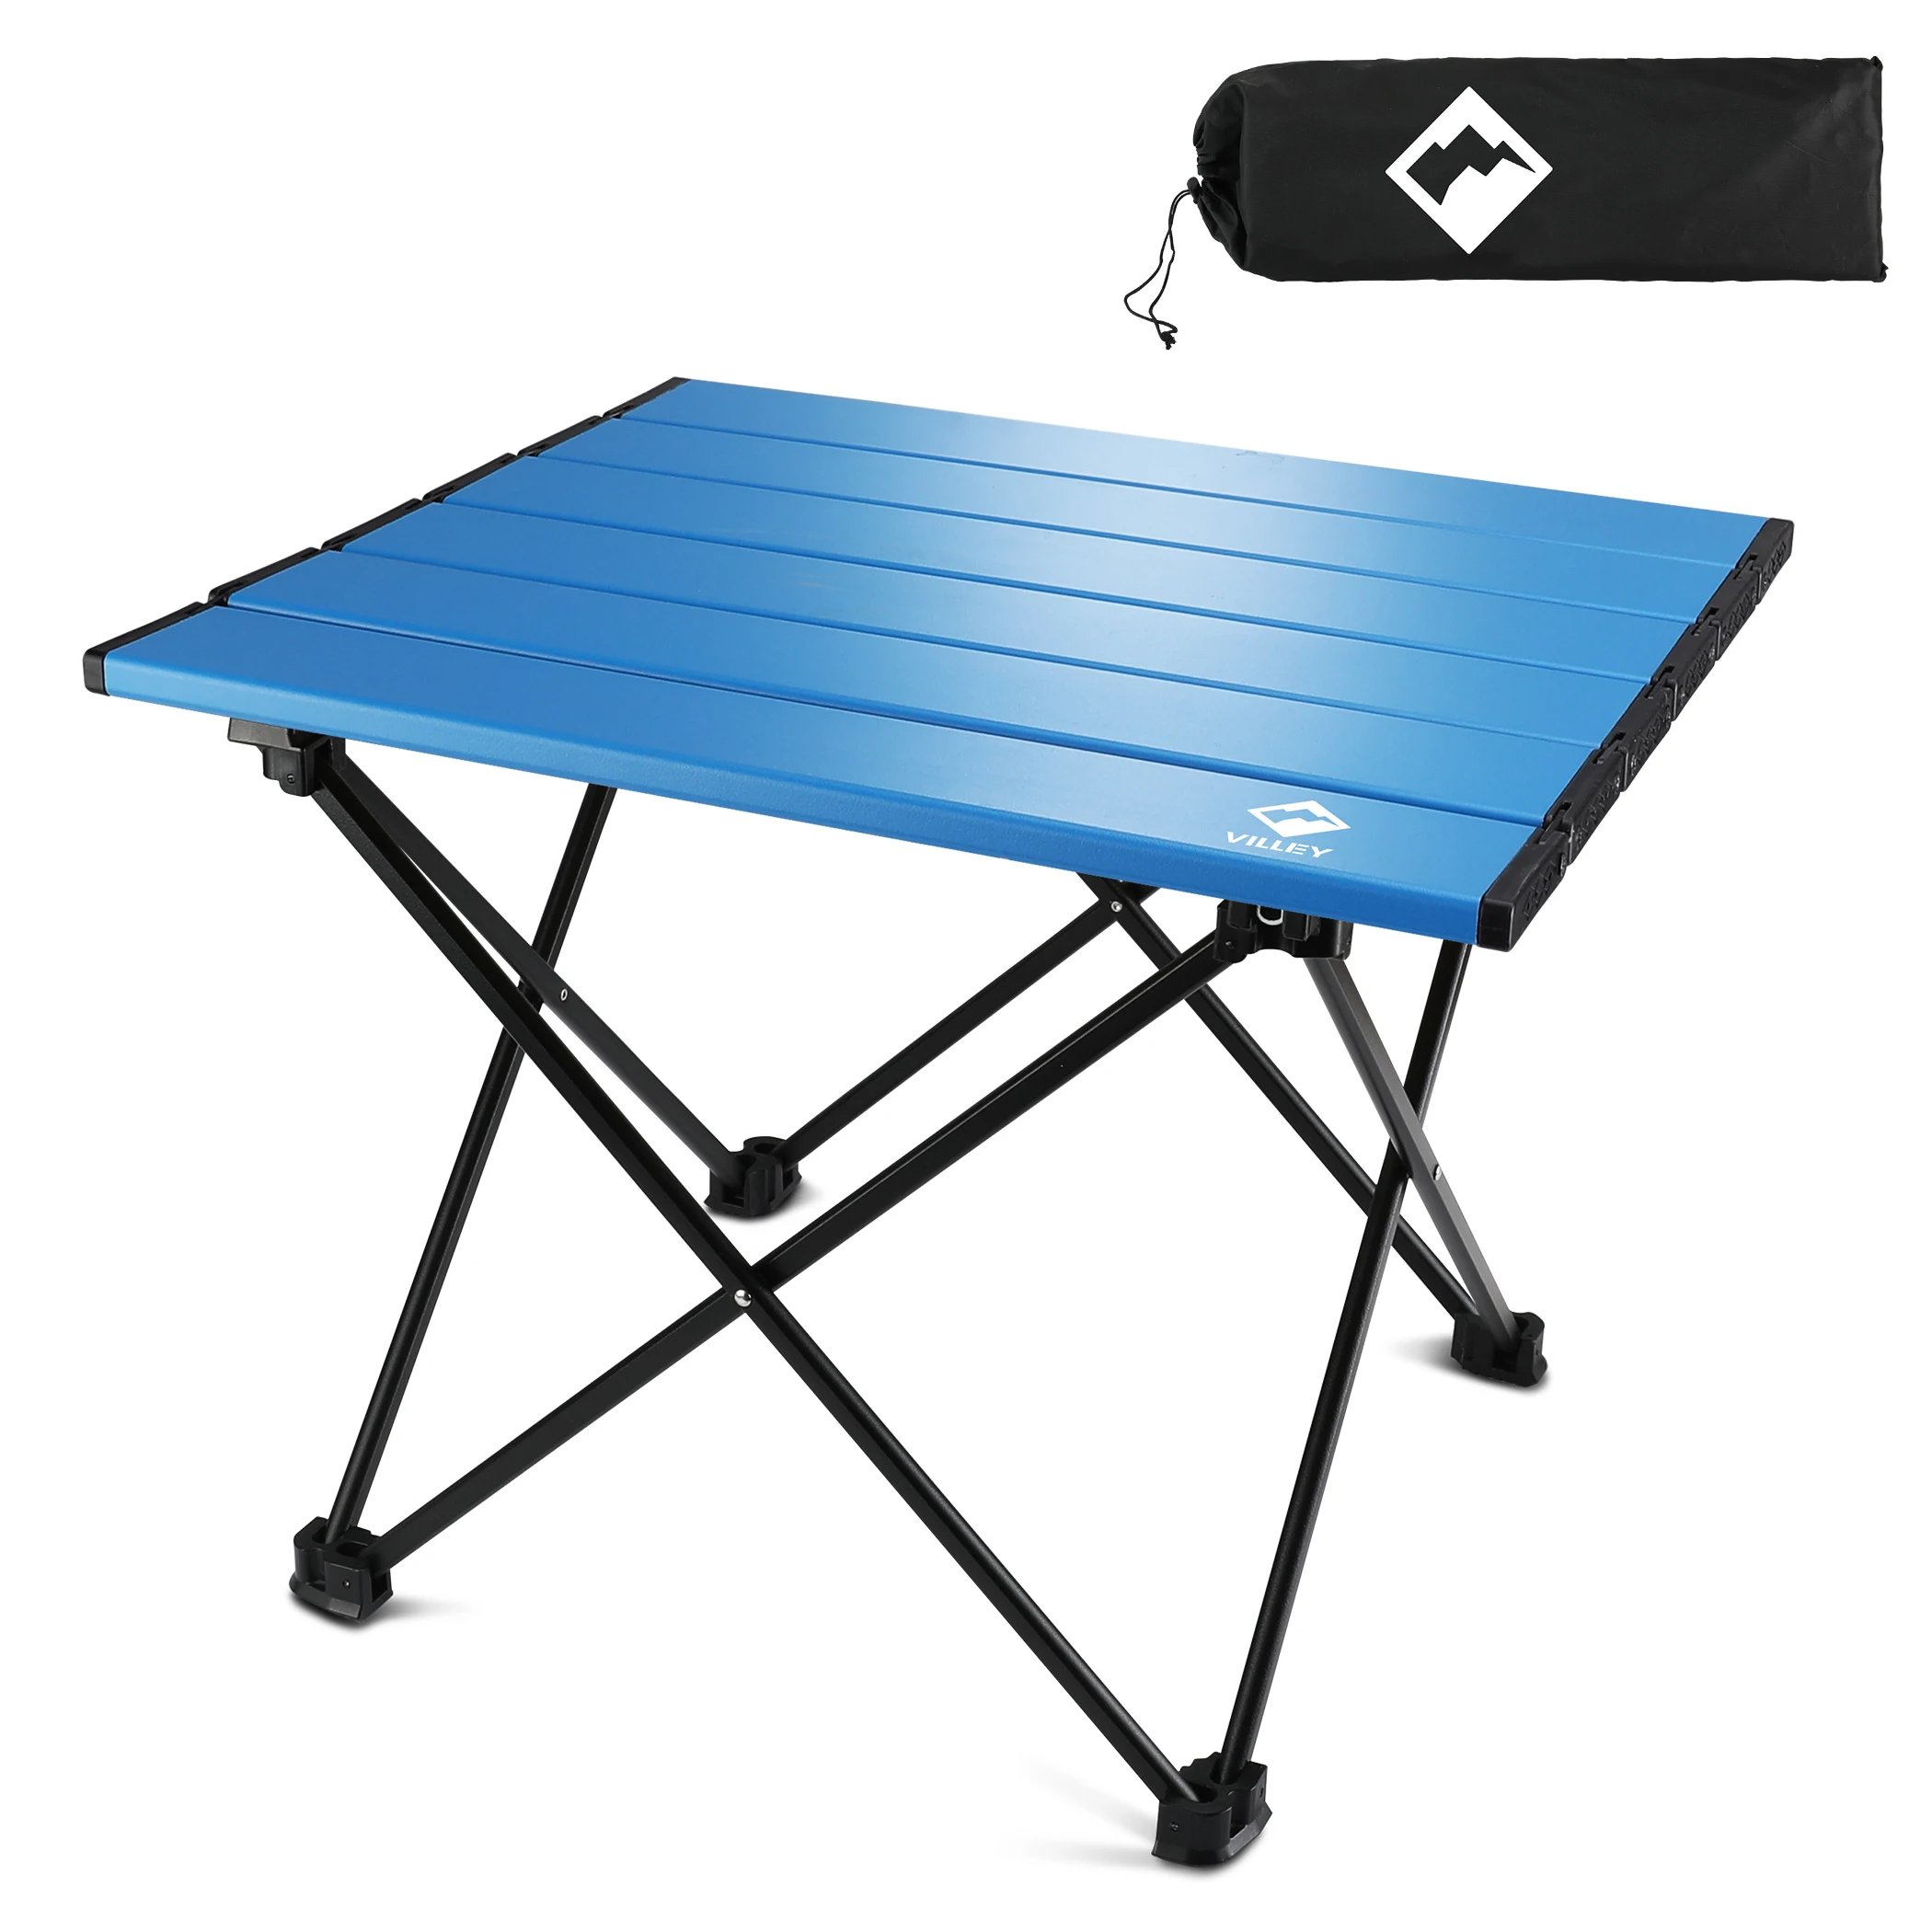 mesa-plegable-de-aleacion-de-aluminio-para-acampar-al-aire-libre-escritorio-portatil-multifuncion-para-picnic-senderismo-barbacoa-al-aire-libre